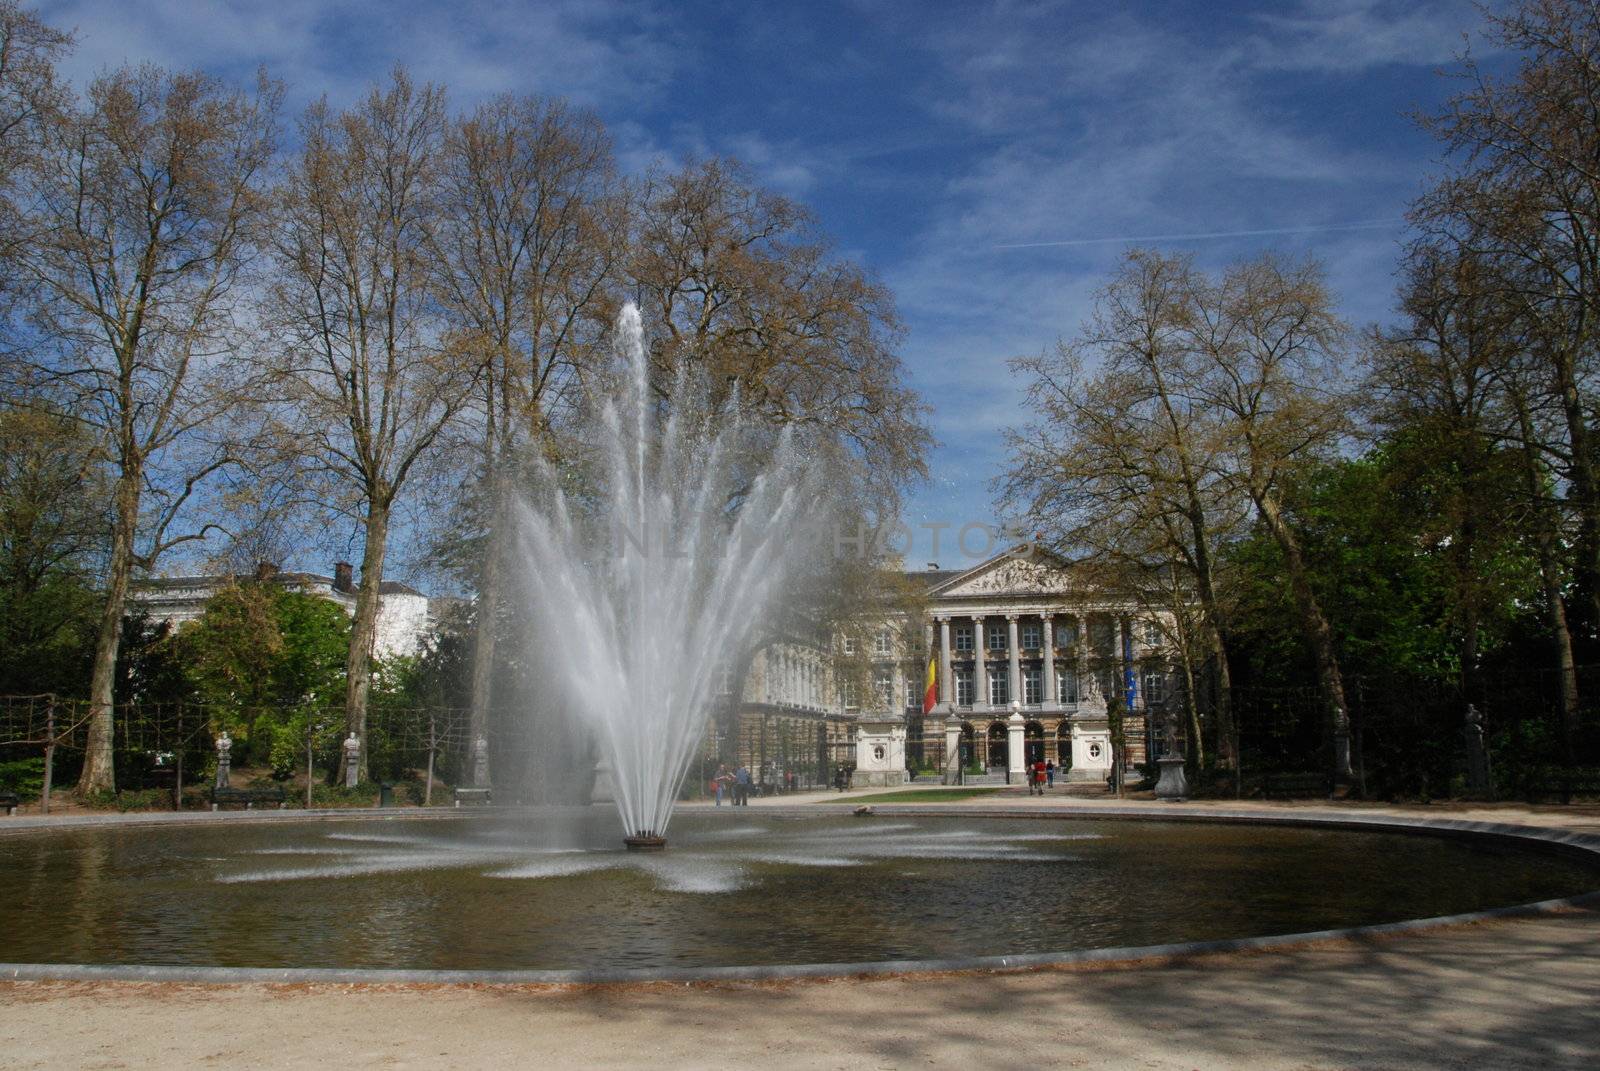 Brussels Park by drakodav